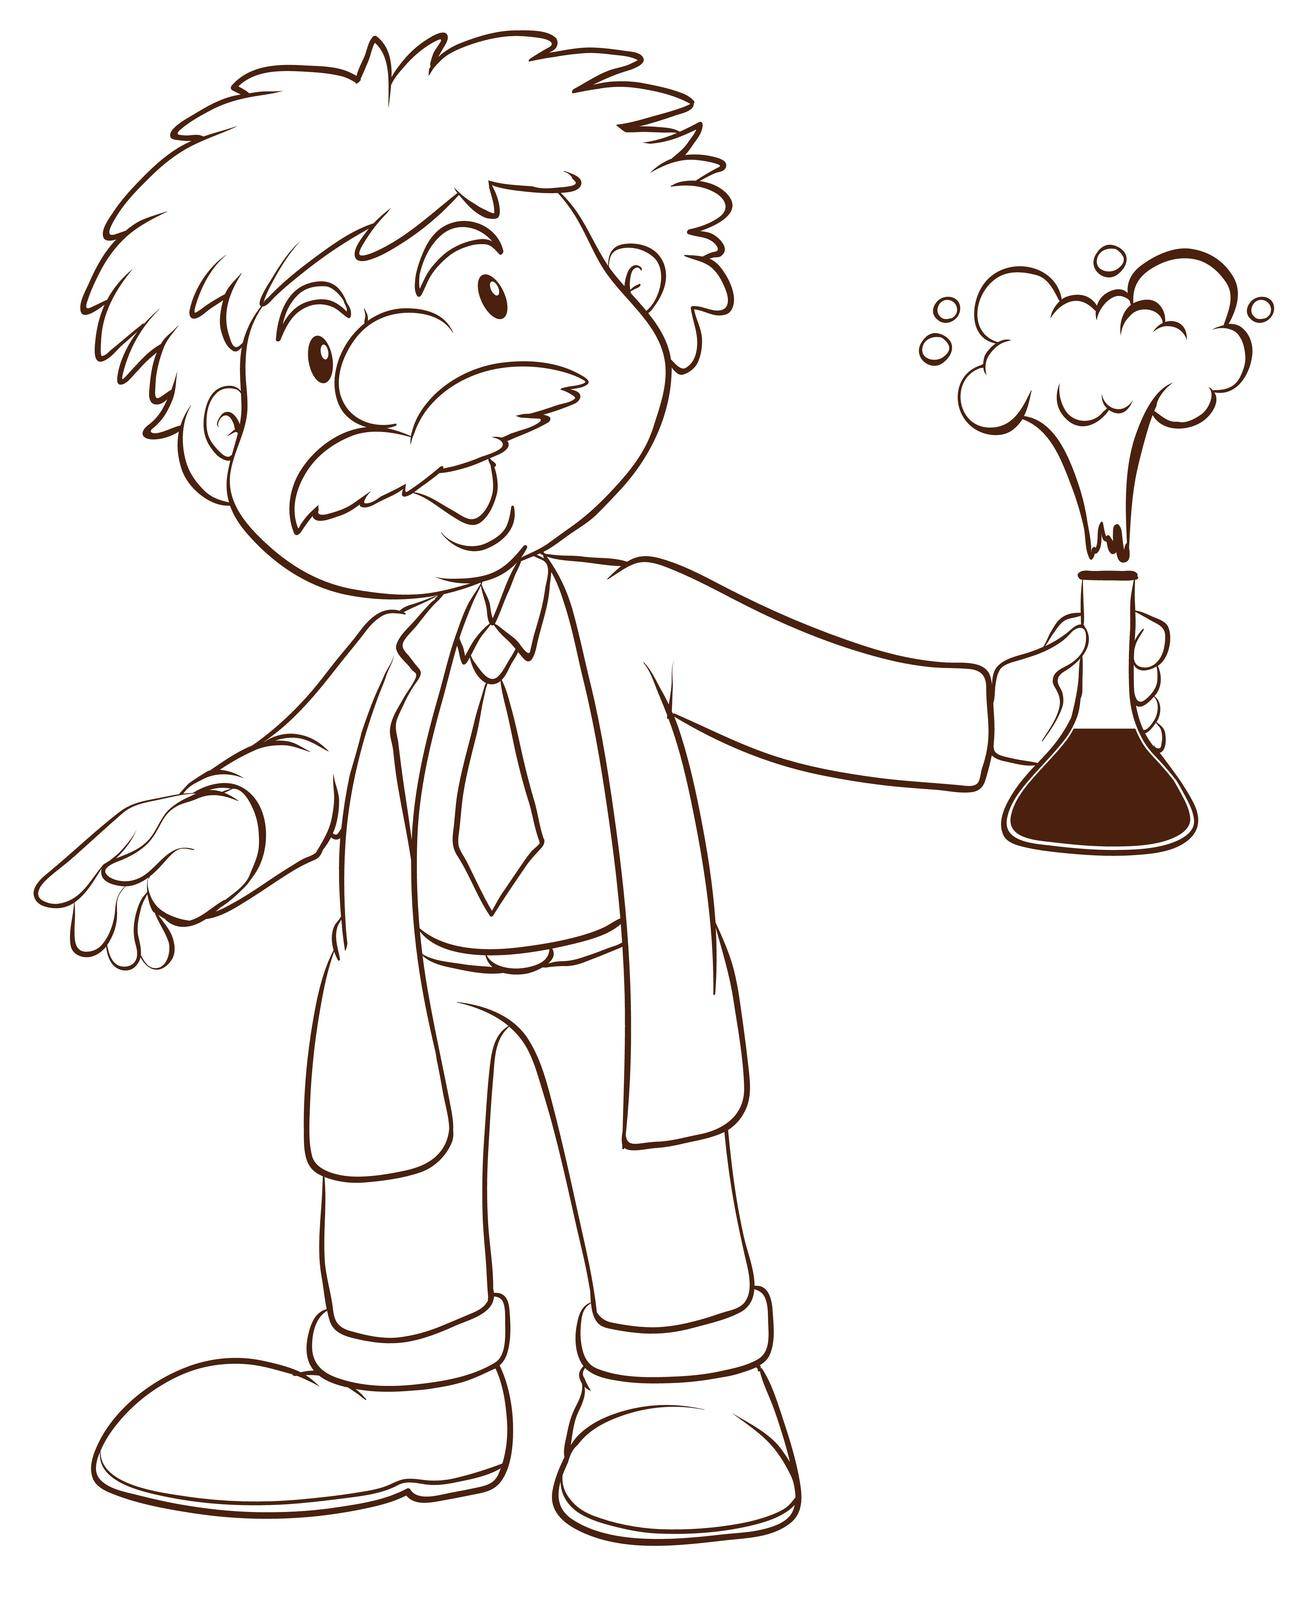 A simple sketch of a scientist by iimages